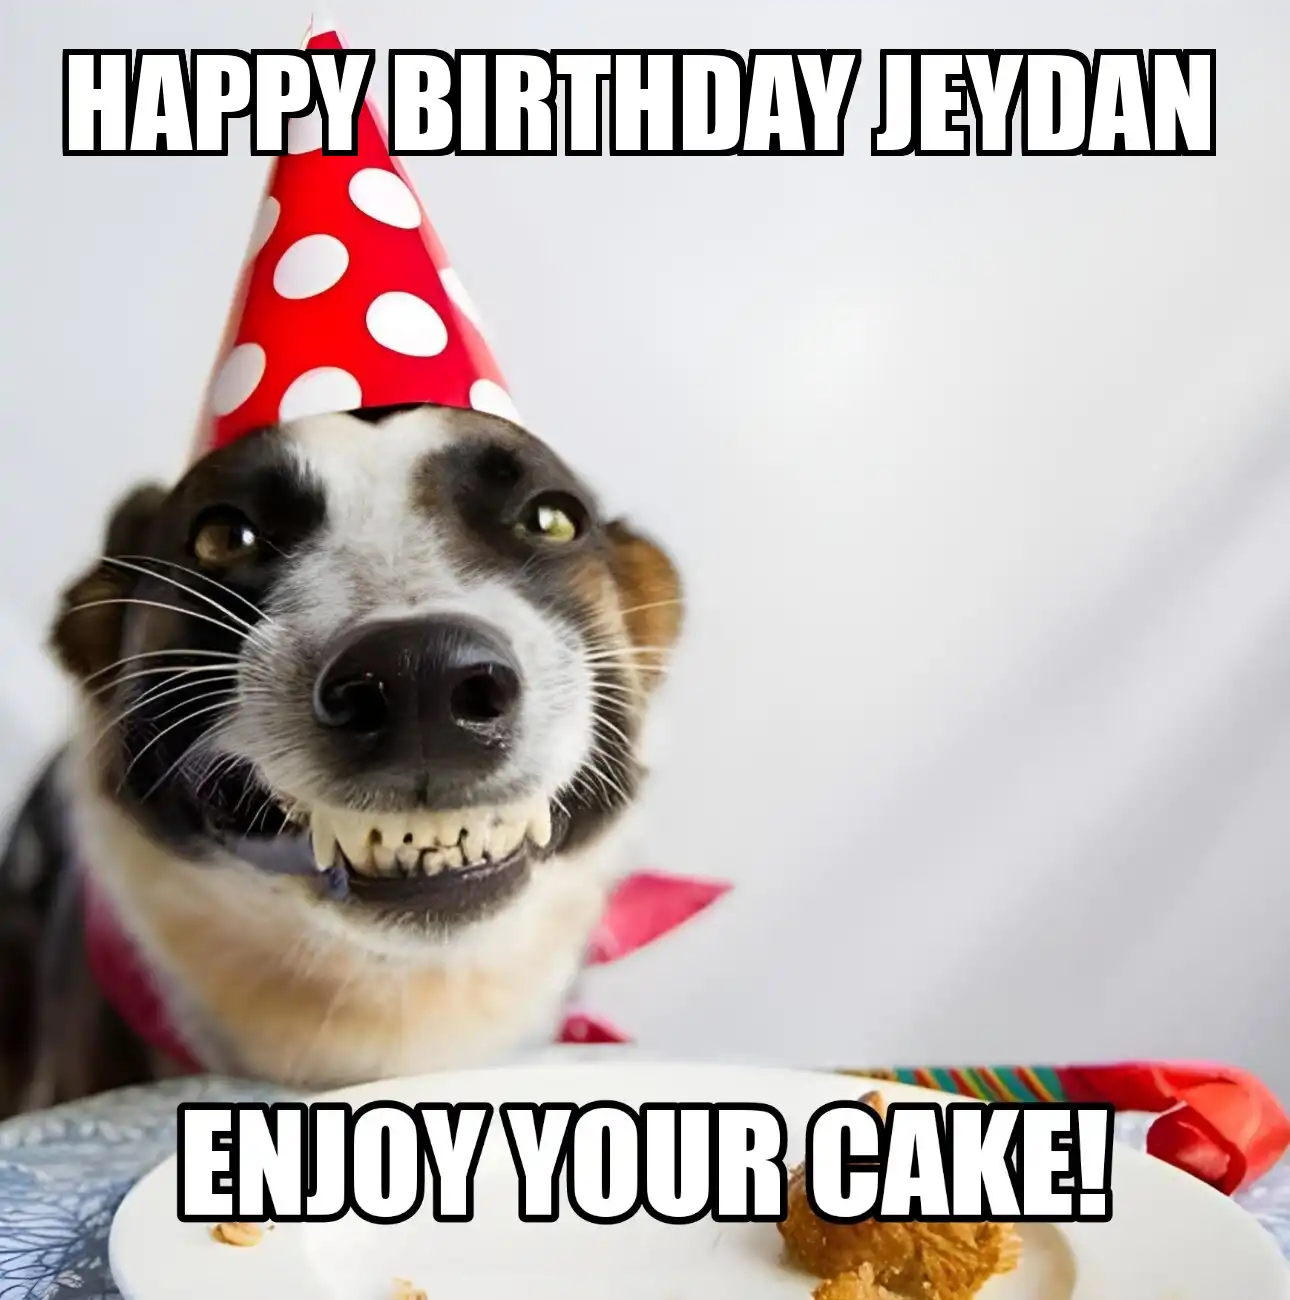 Happy Birthday Jeydan Enjoy Your Cake Dog Meme